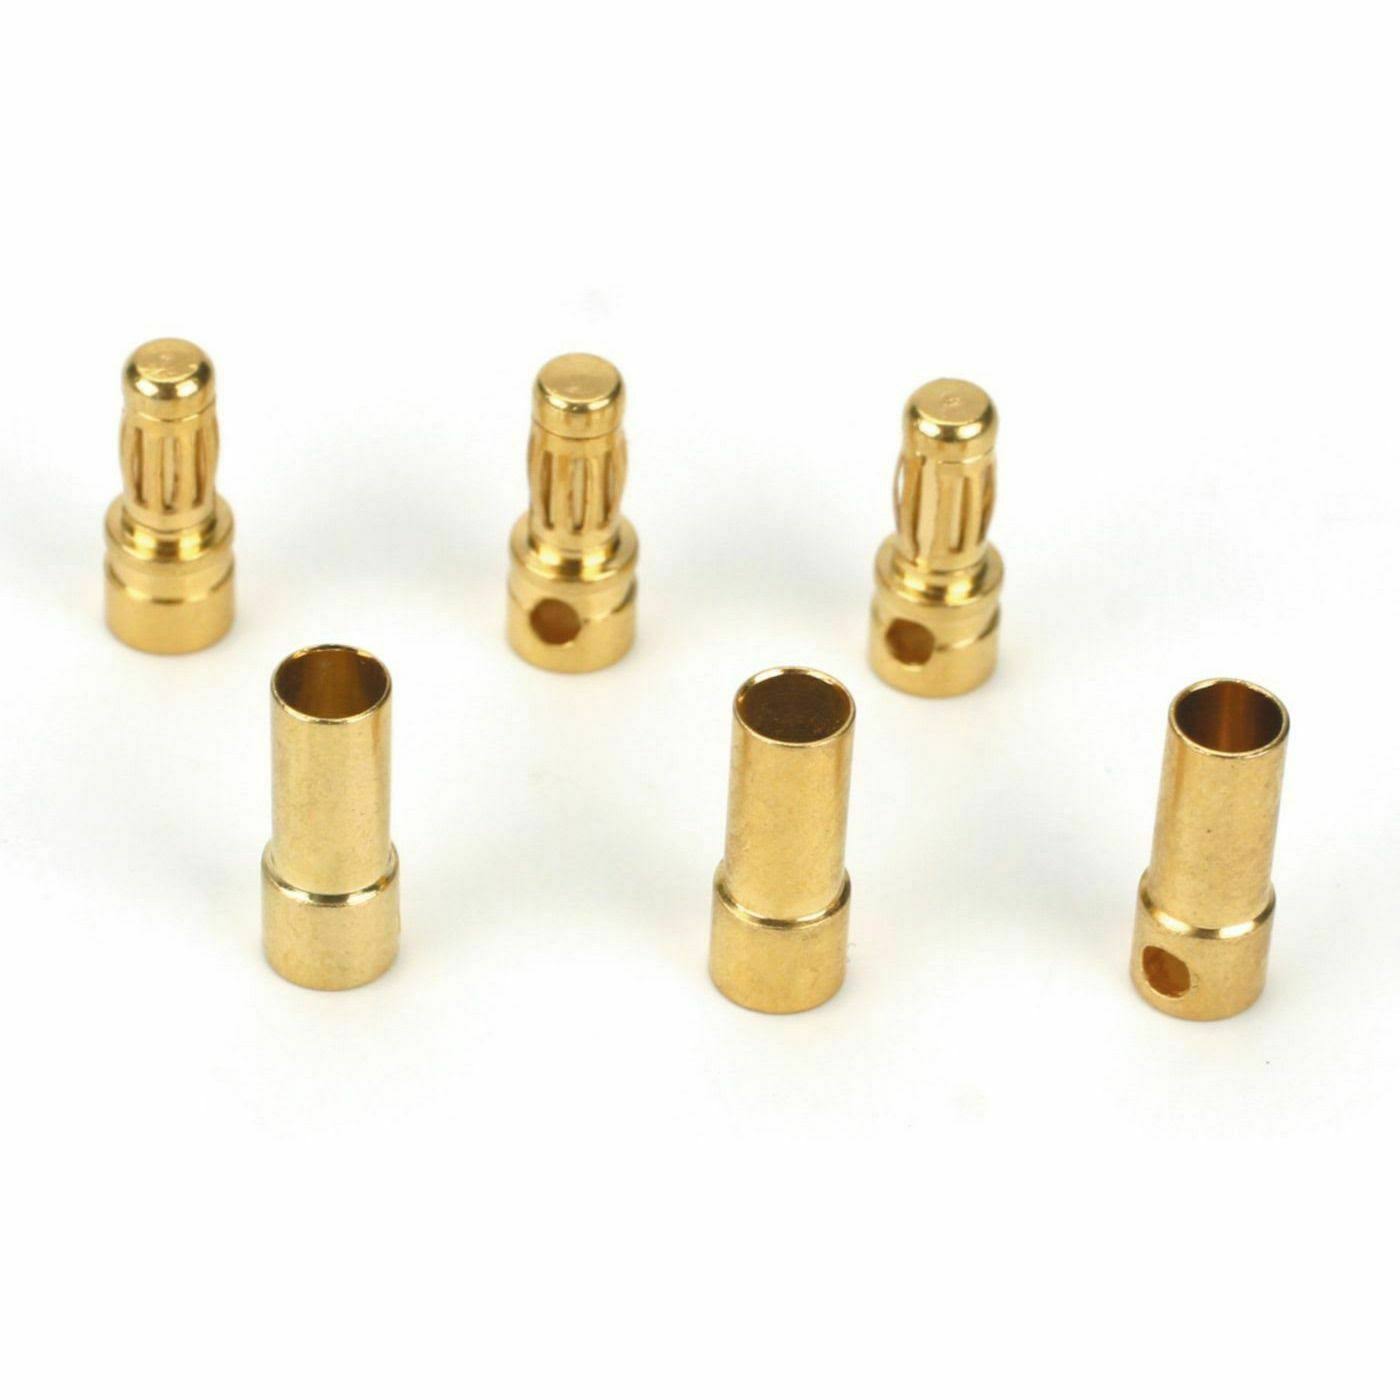 Dynamite Gold Bullet Connector Set, 3.5mm (3) DYNC0043